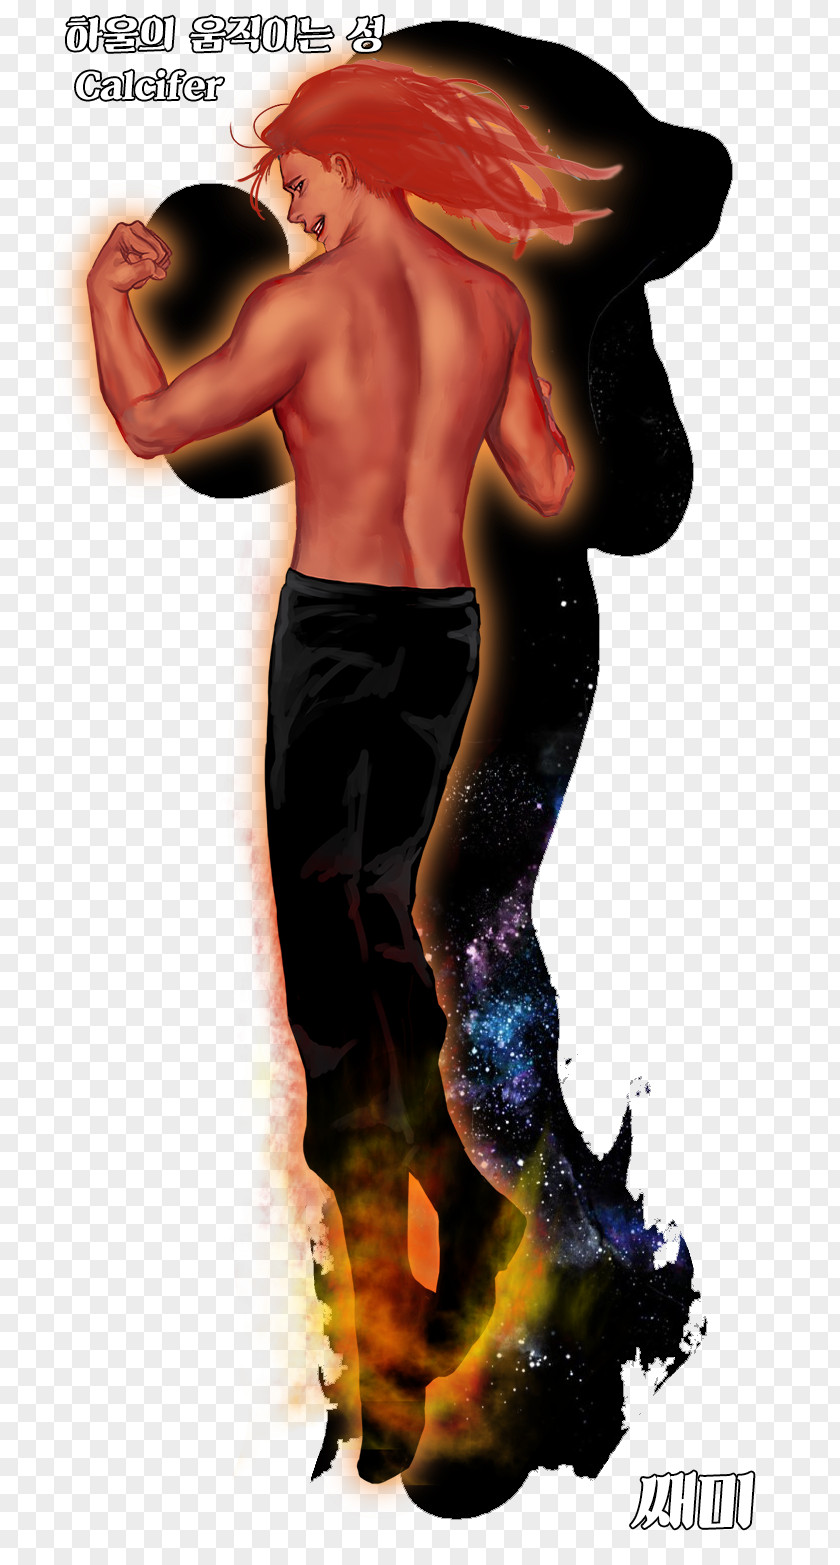 Calcifer Cartoon Poster Muscle Legendary Creature PNG